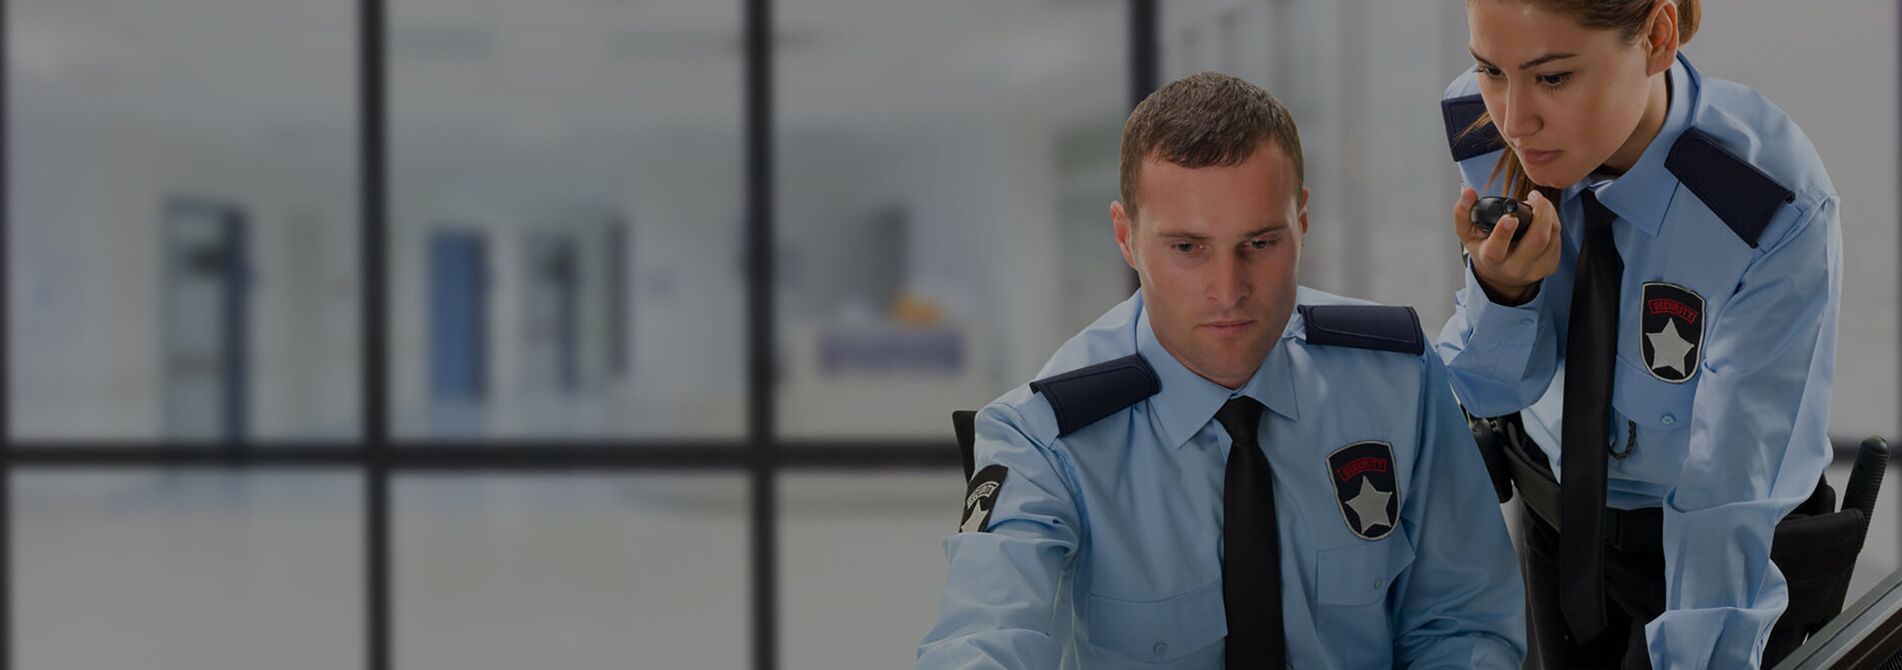 Security Company Melbourne | Security Hire Melbourne - Sens Security  Services